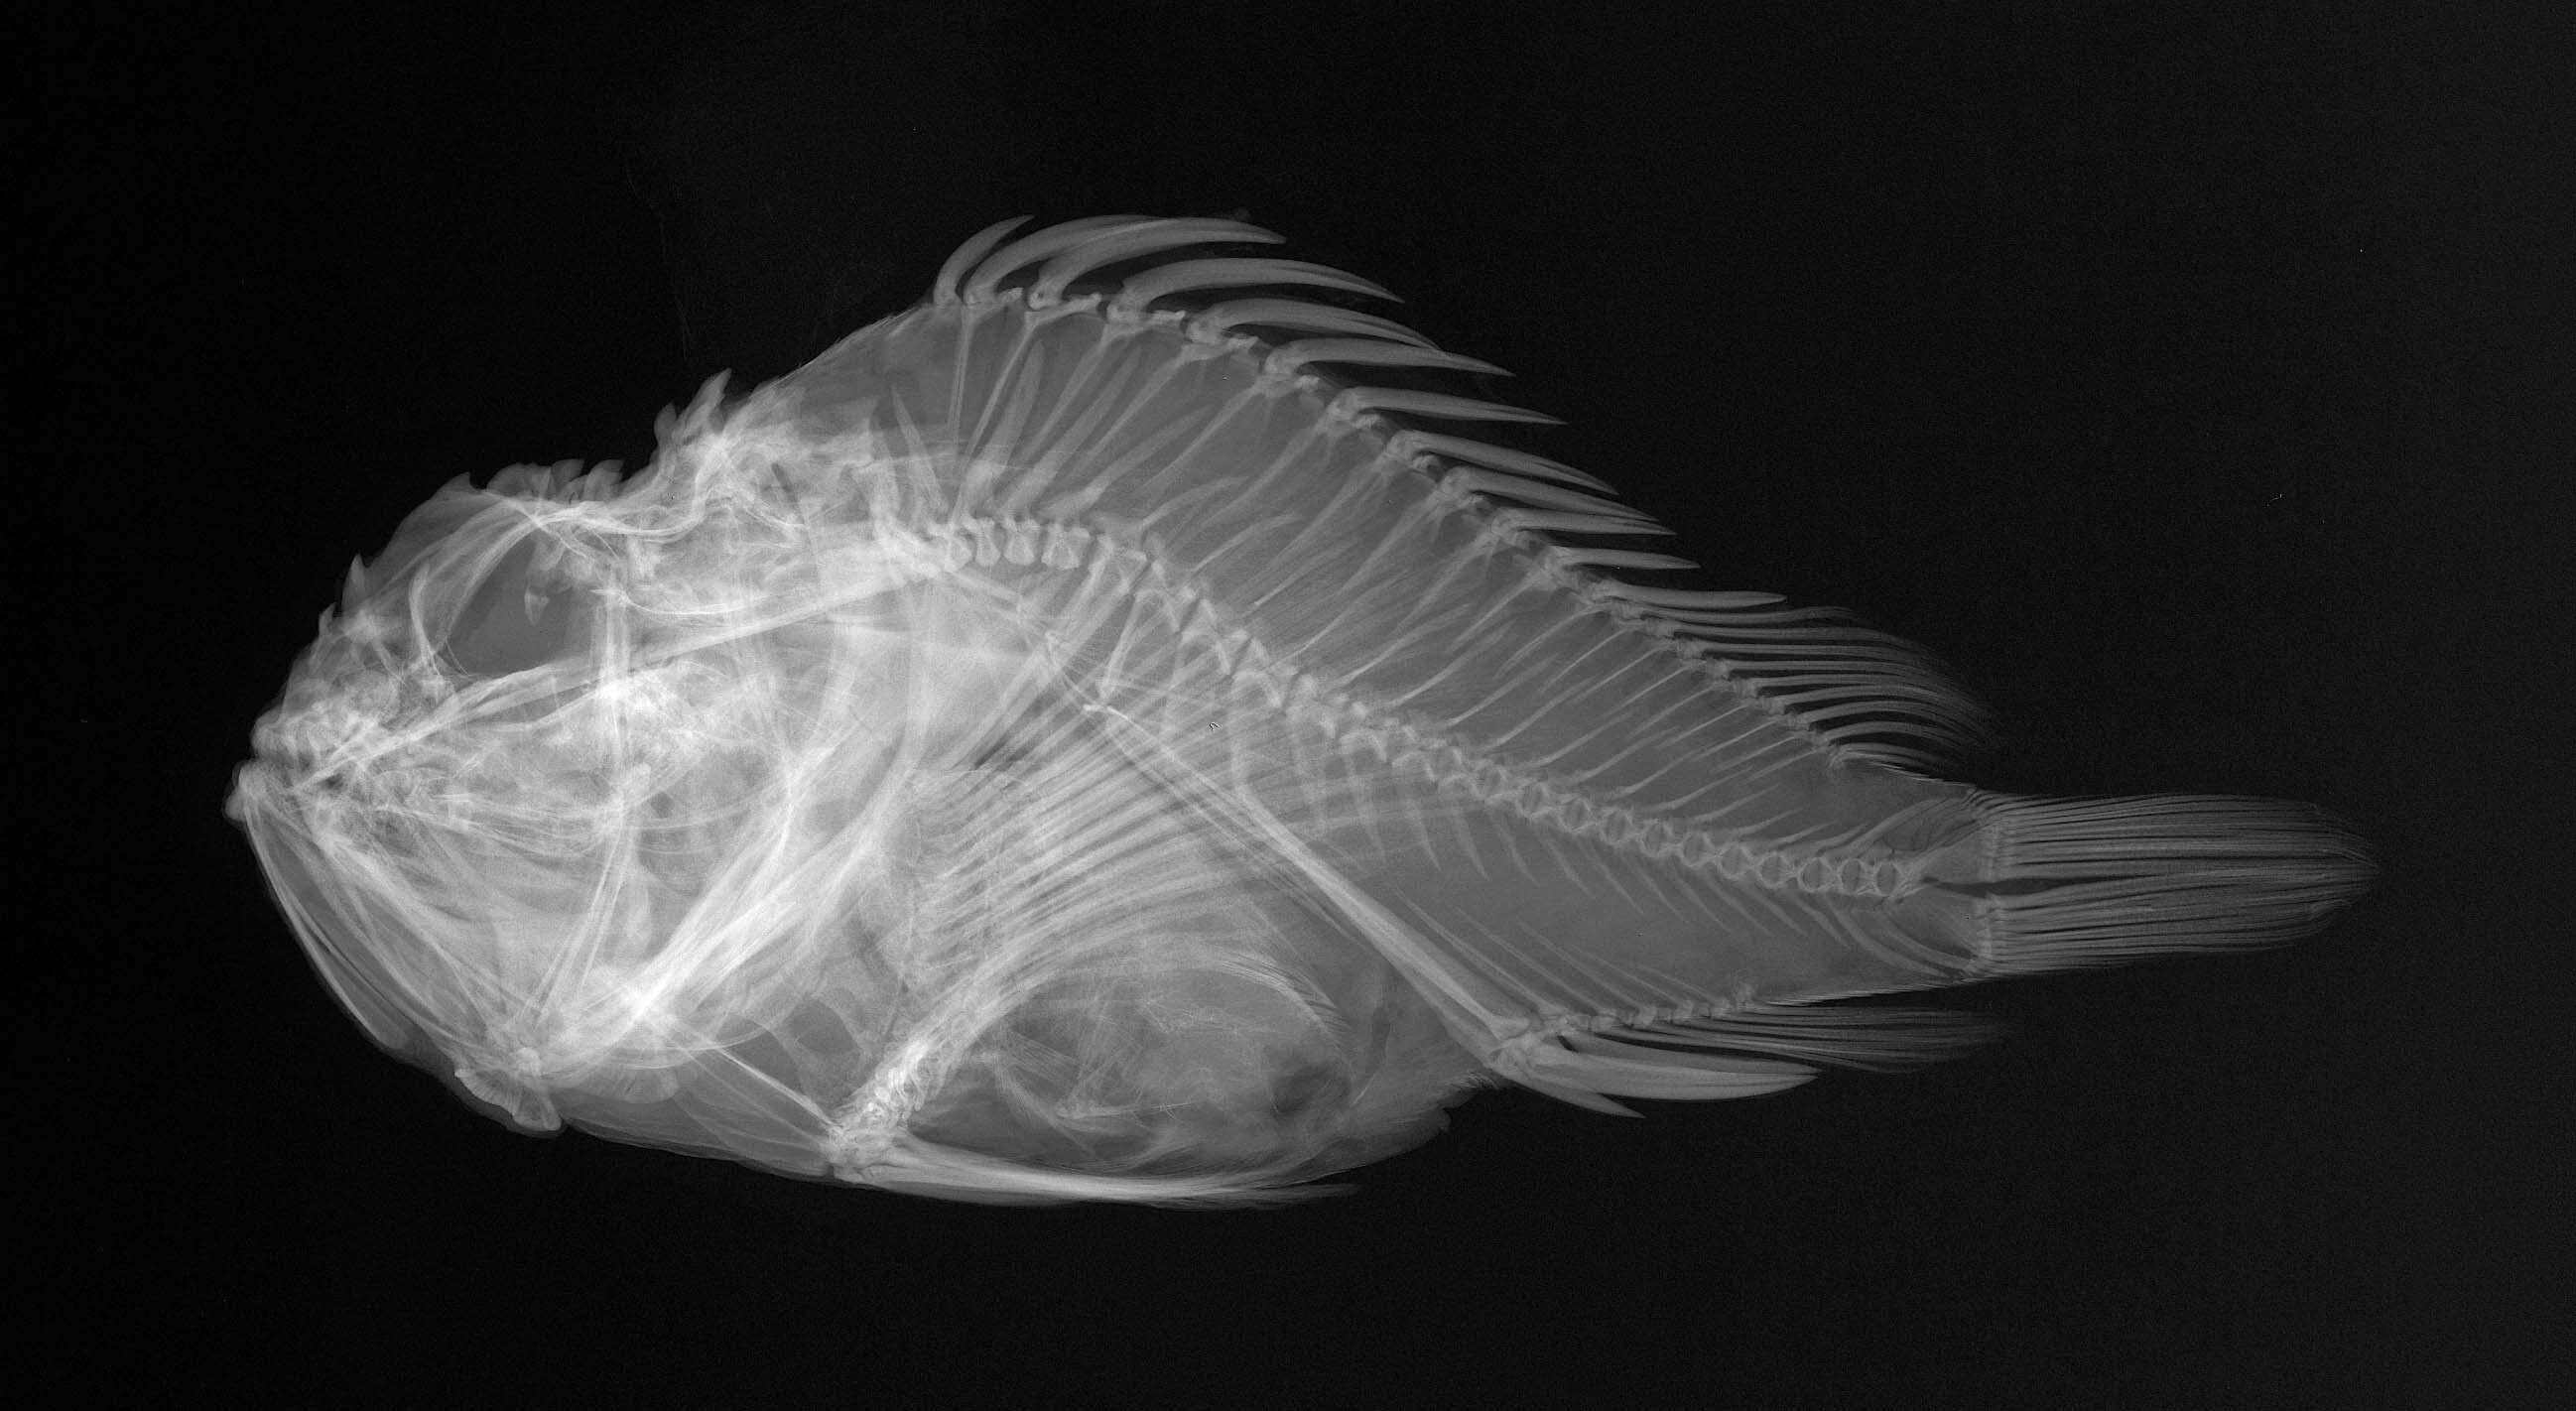 Image of Shortsnout scorpionfish